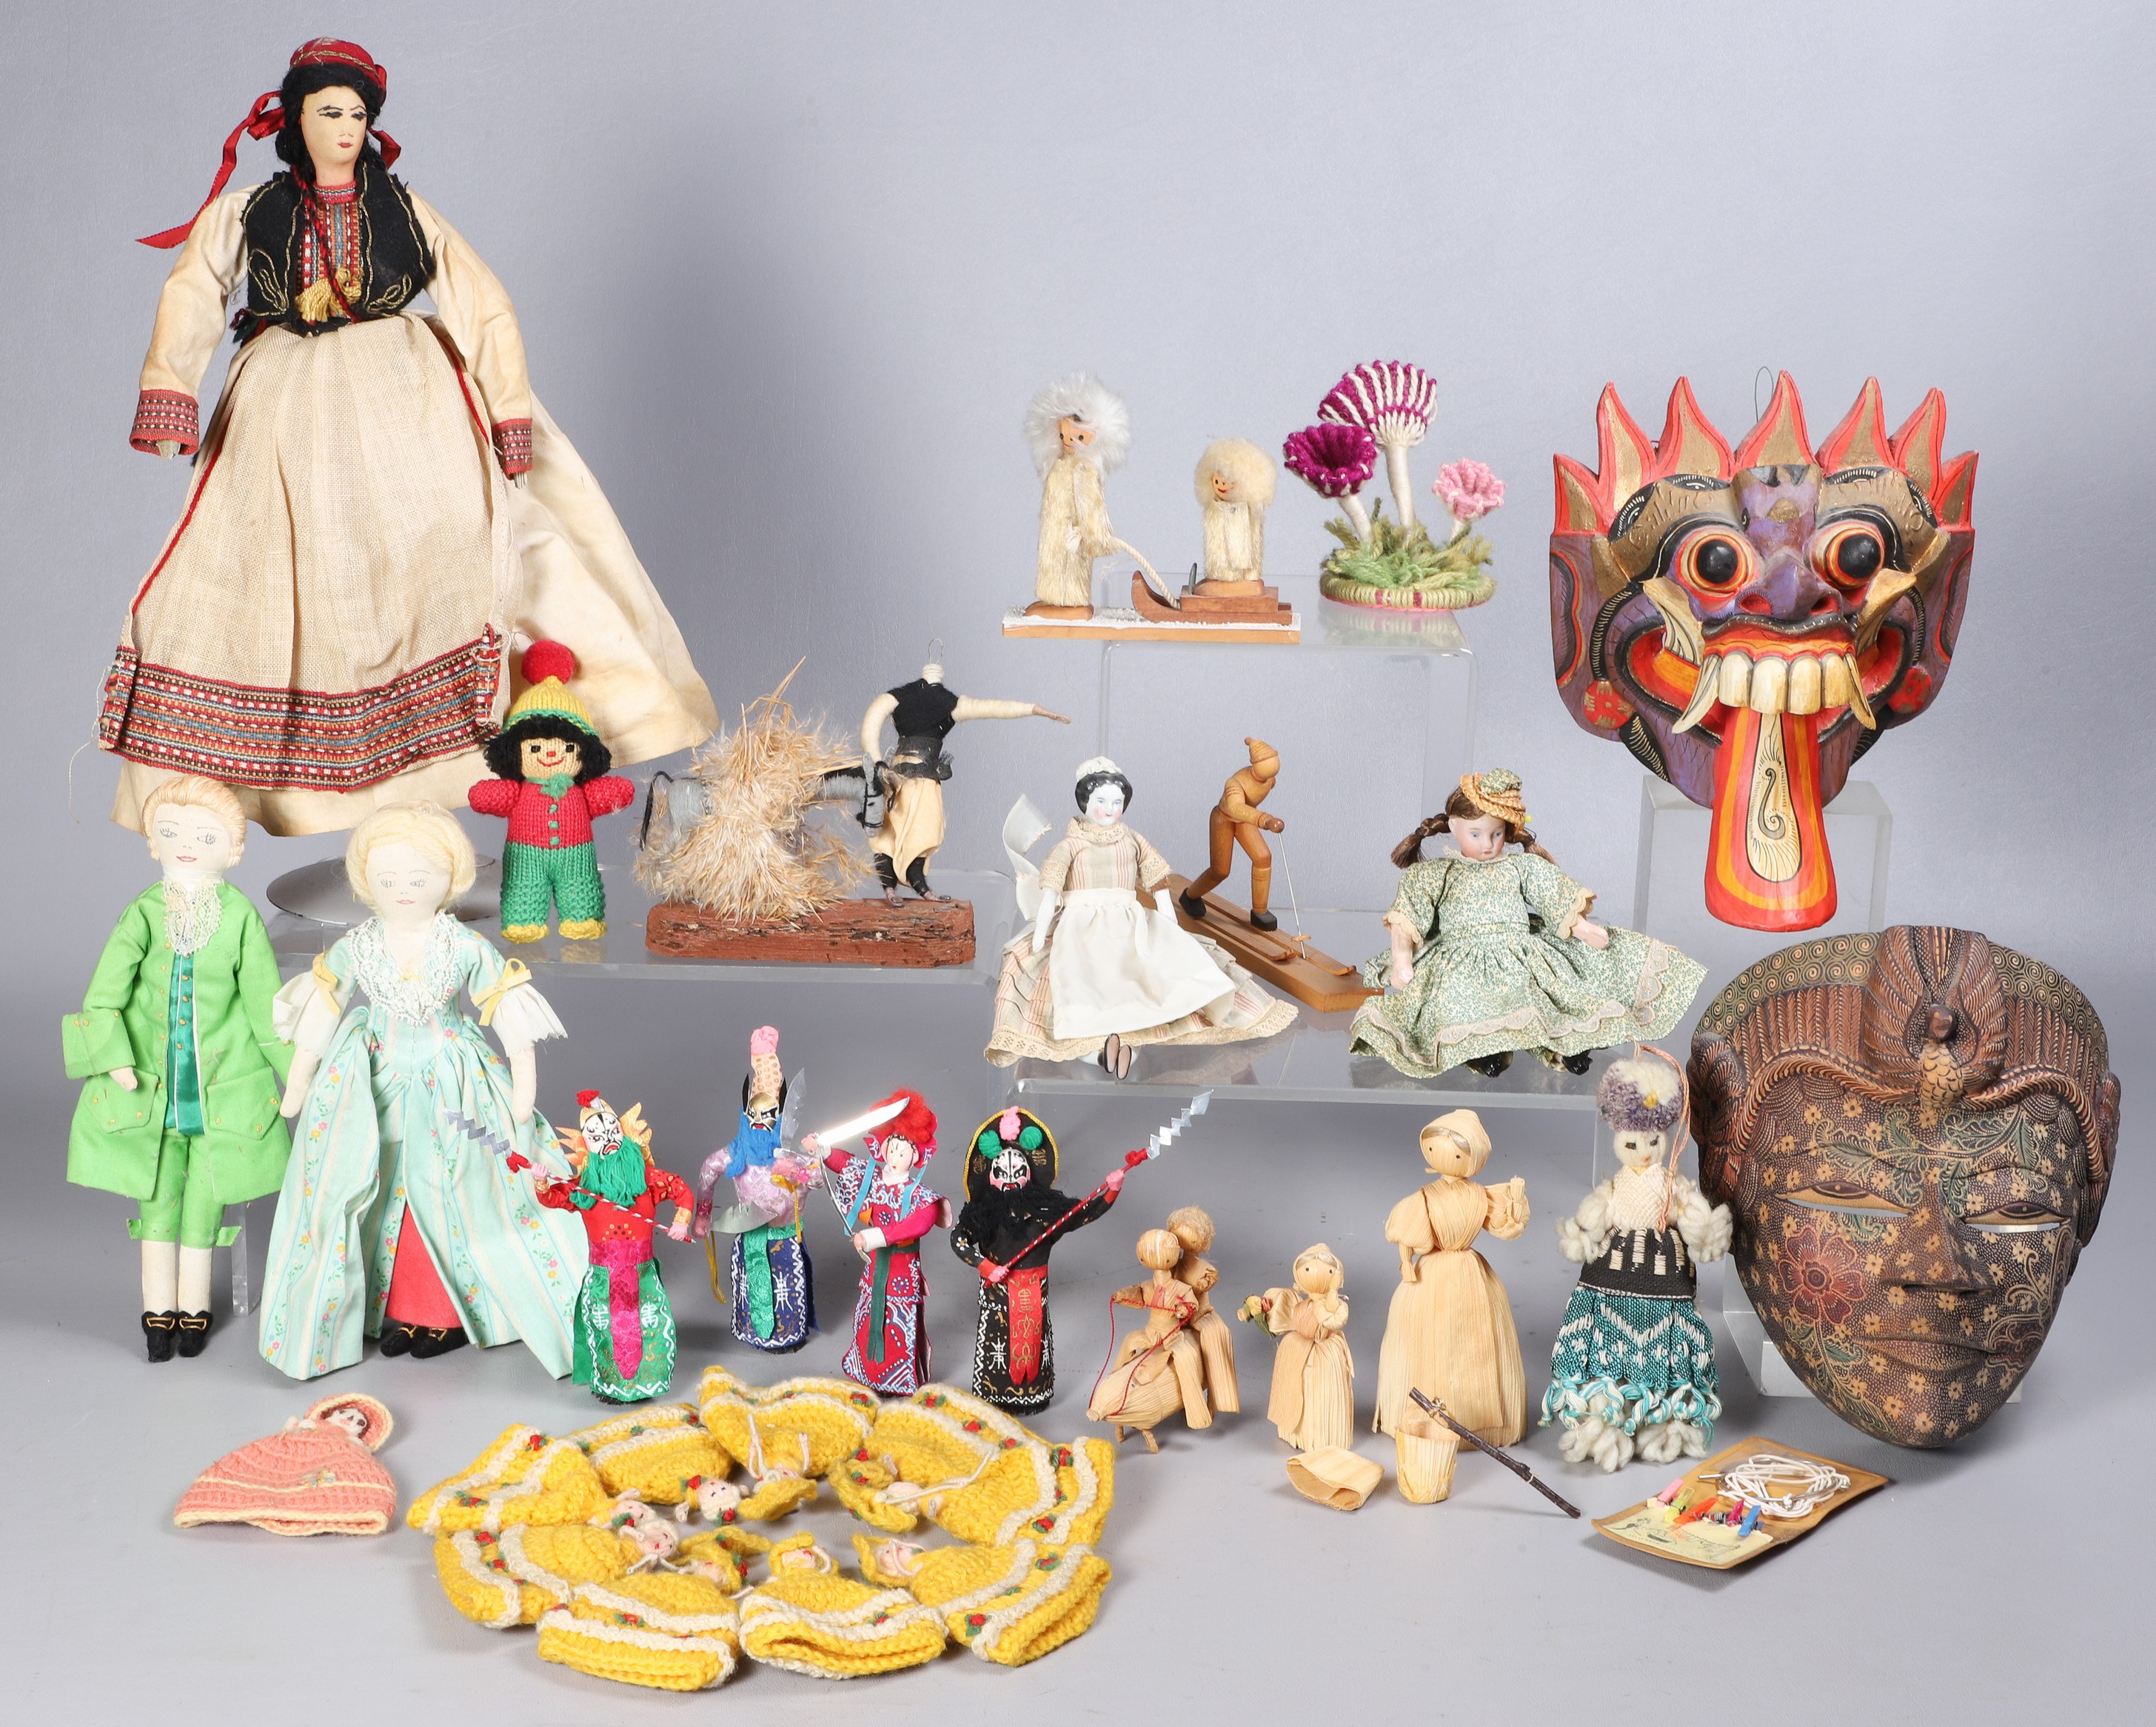 Assorted dolls, ethnic masks to